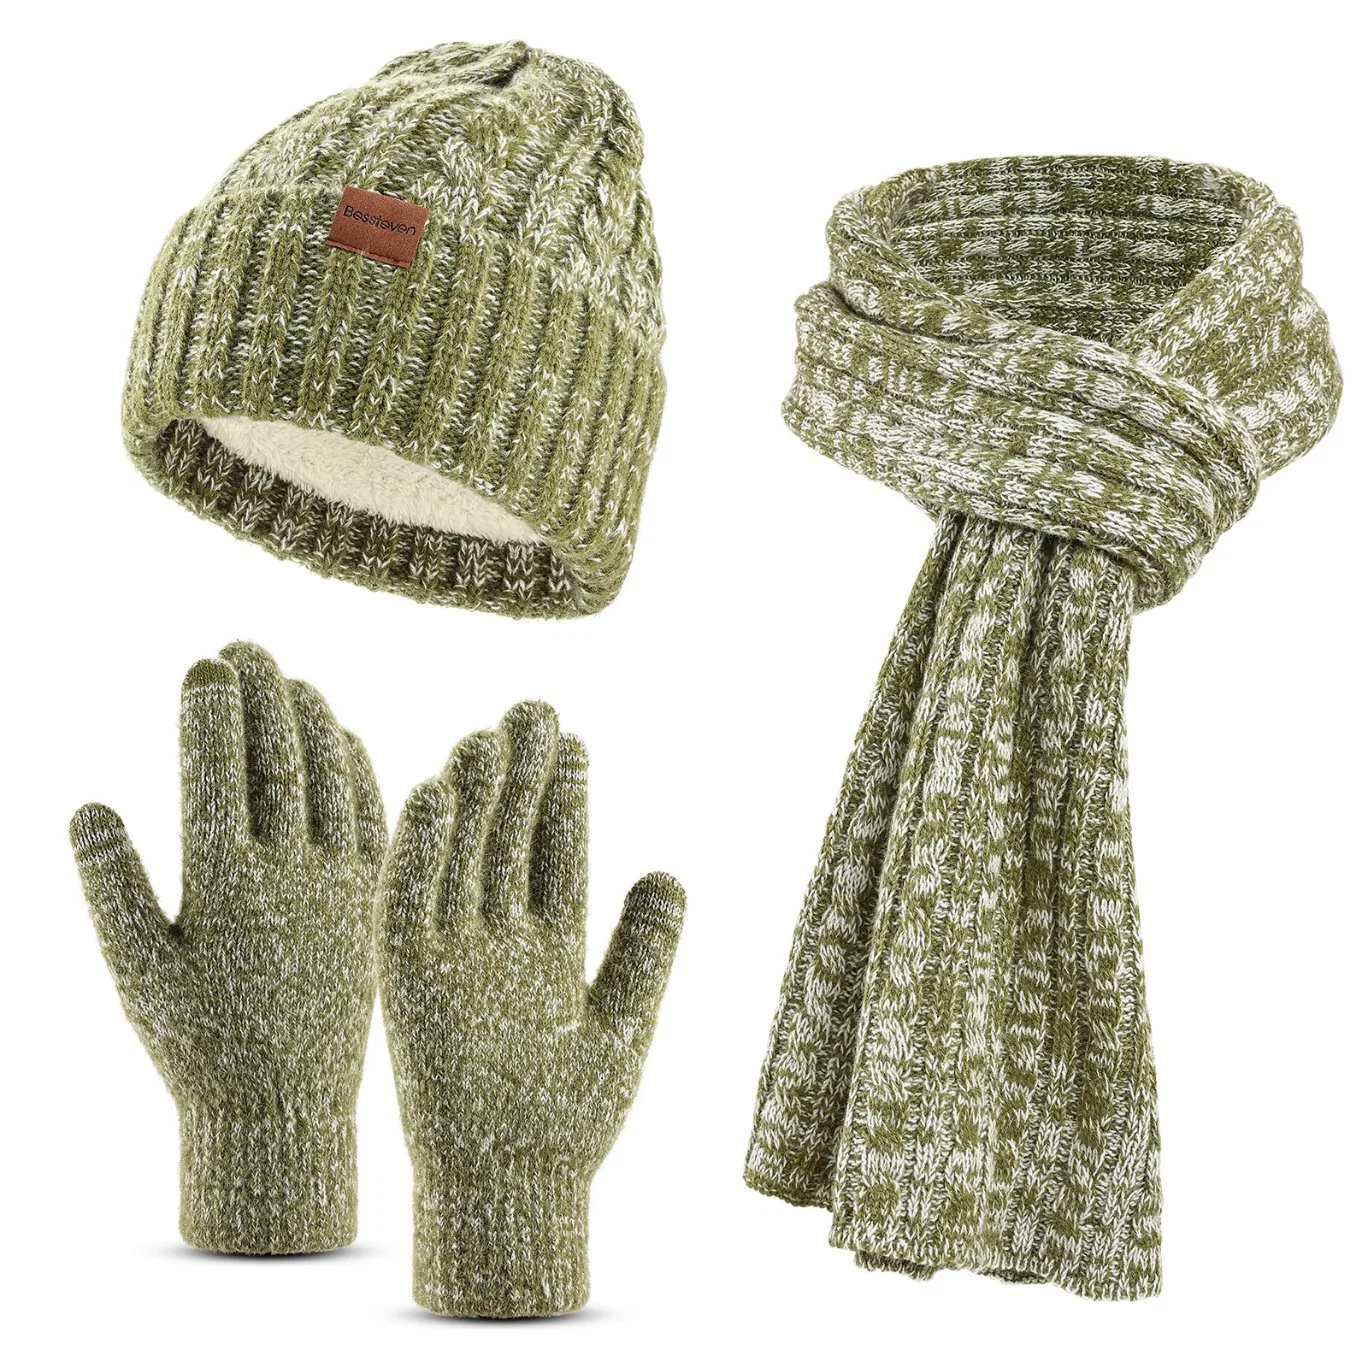 Winter Warm Knit Hat Touchscreen Gloves Long Scarf Set with Fleece